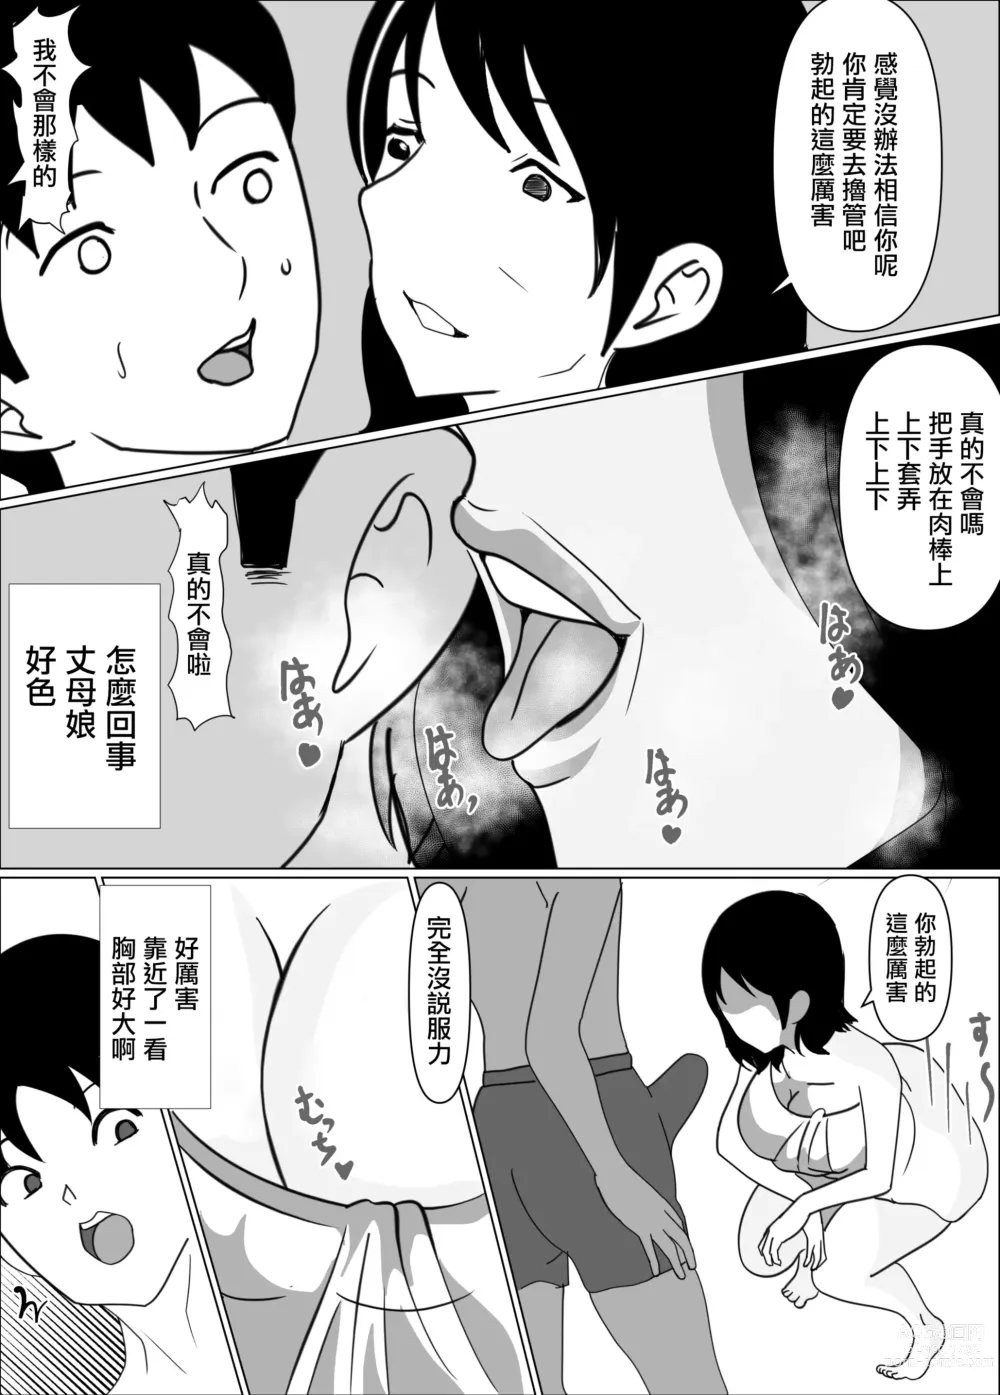 Page 5 of doujinshi 為了在妻子的排卵日授精而攢的精子被丈母娘看上了